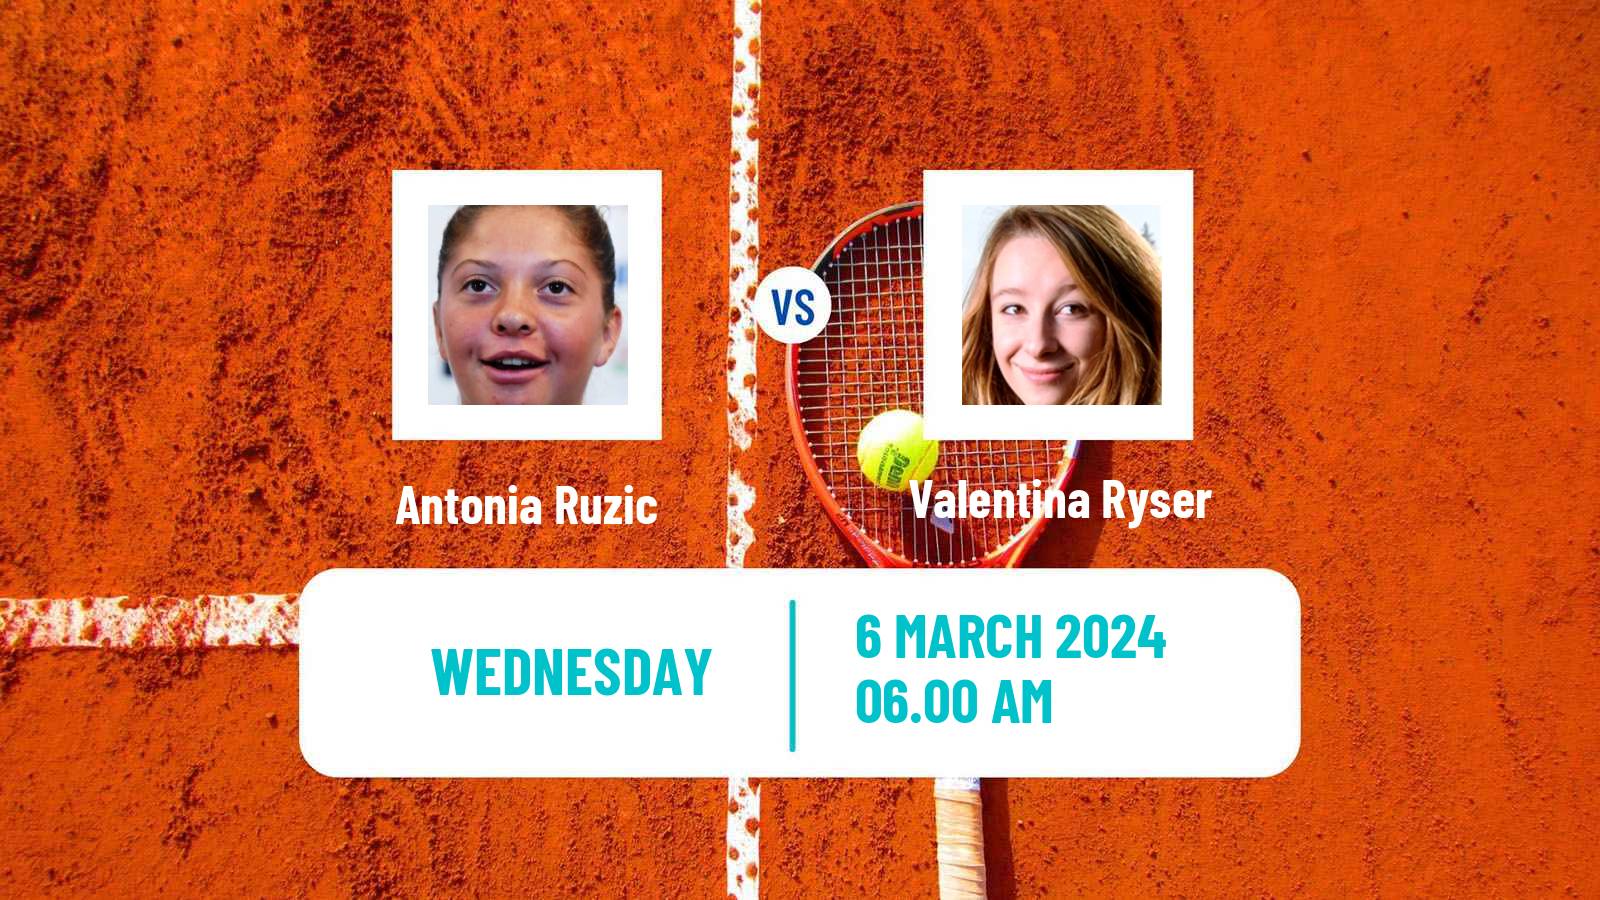 Tennis ITF W75 Trnava Women Antonia Ruzic - Valentina Ryser